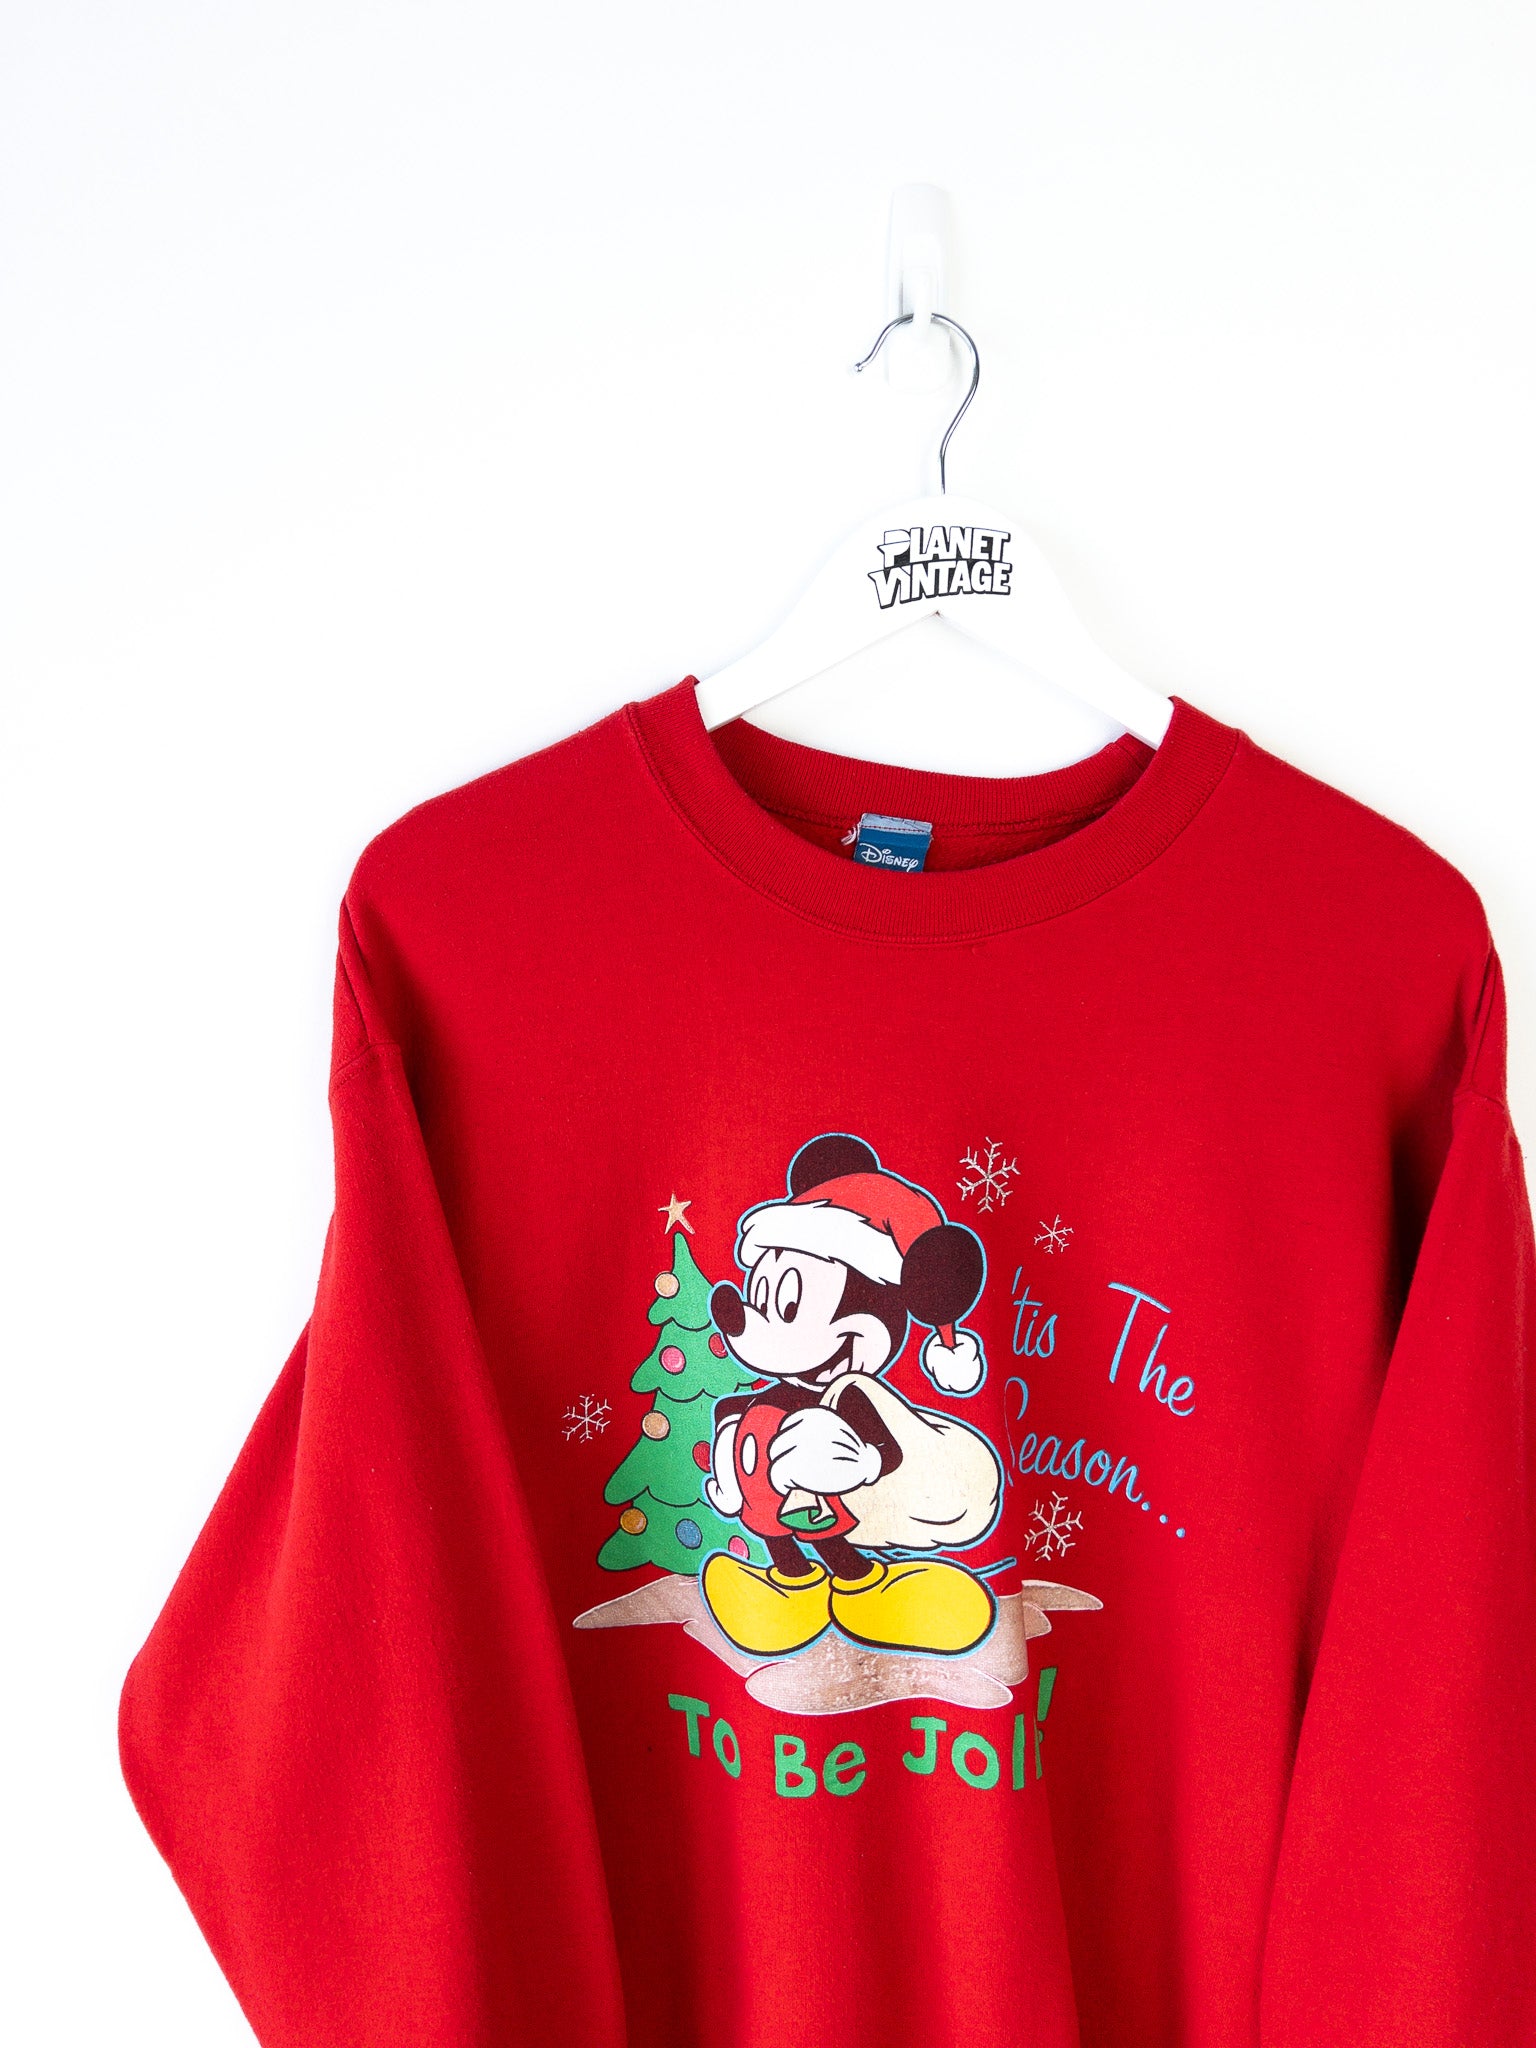 Vintage Mickey Mouse 'Tis the Season Sweatshirt (L)